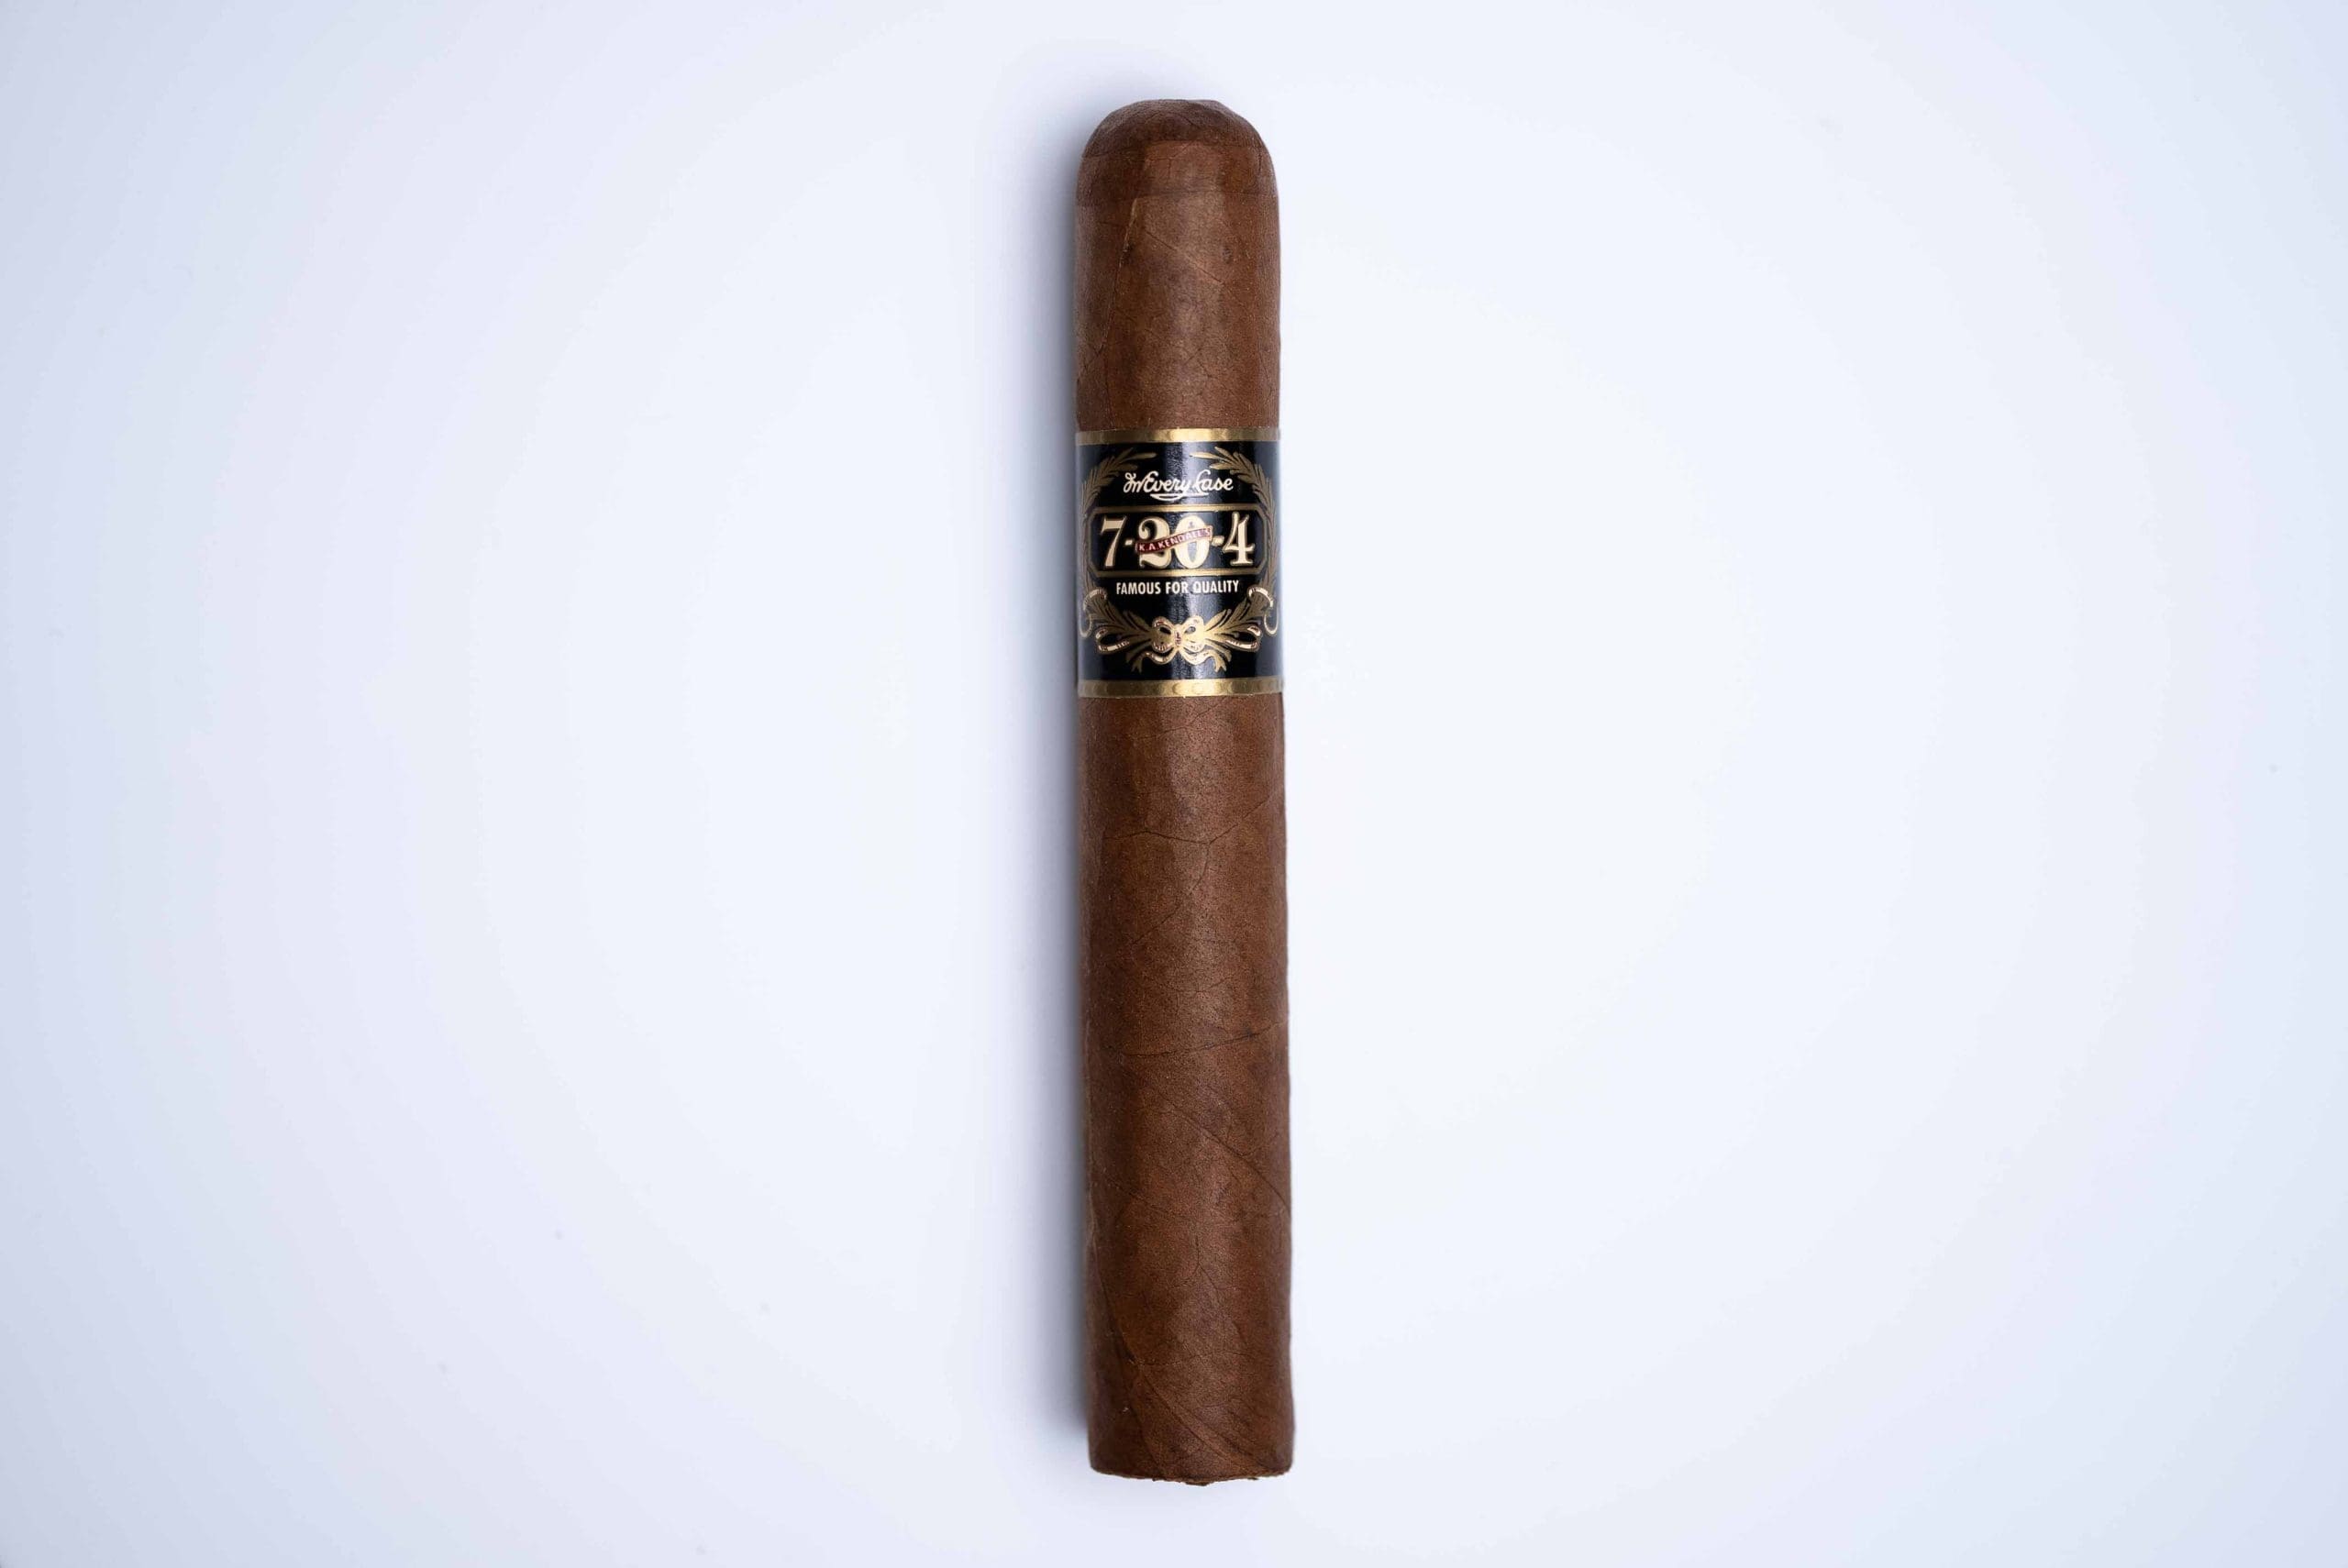 7-20-4 1874 Series Of cigar